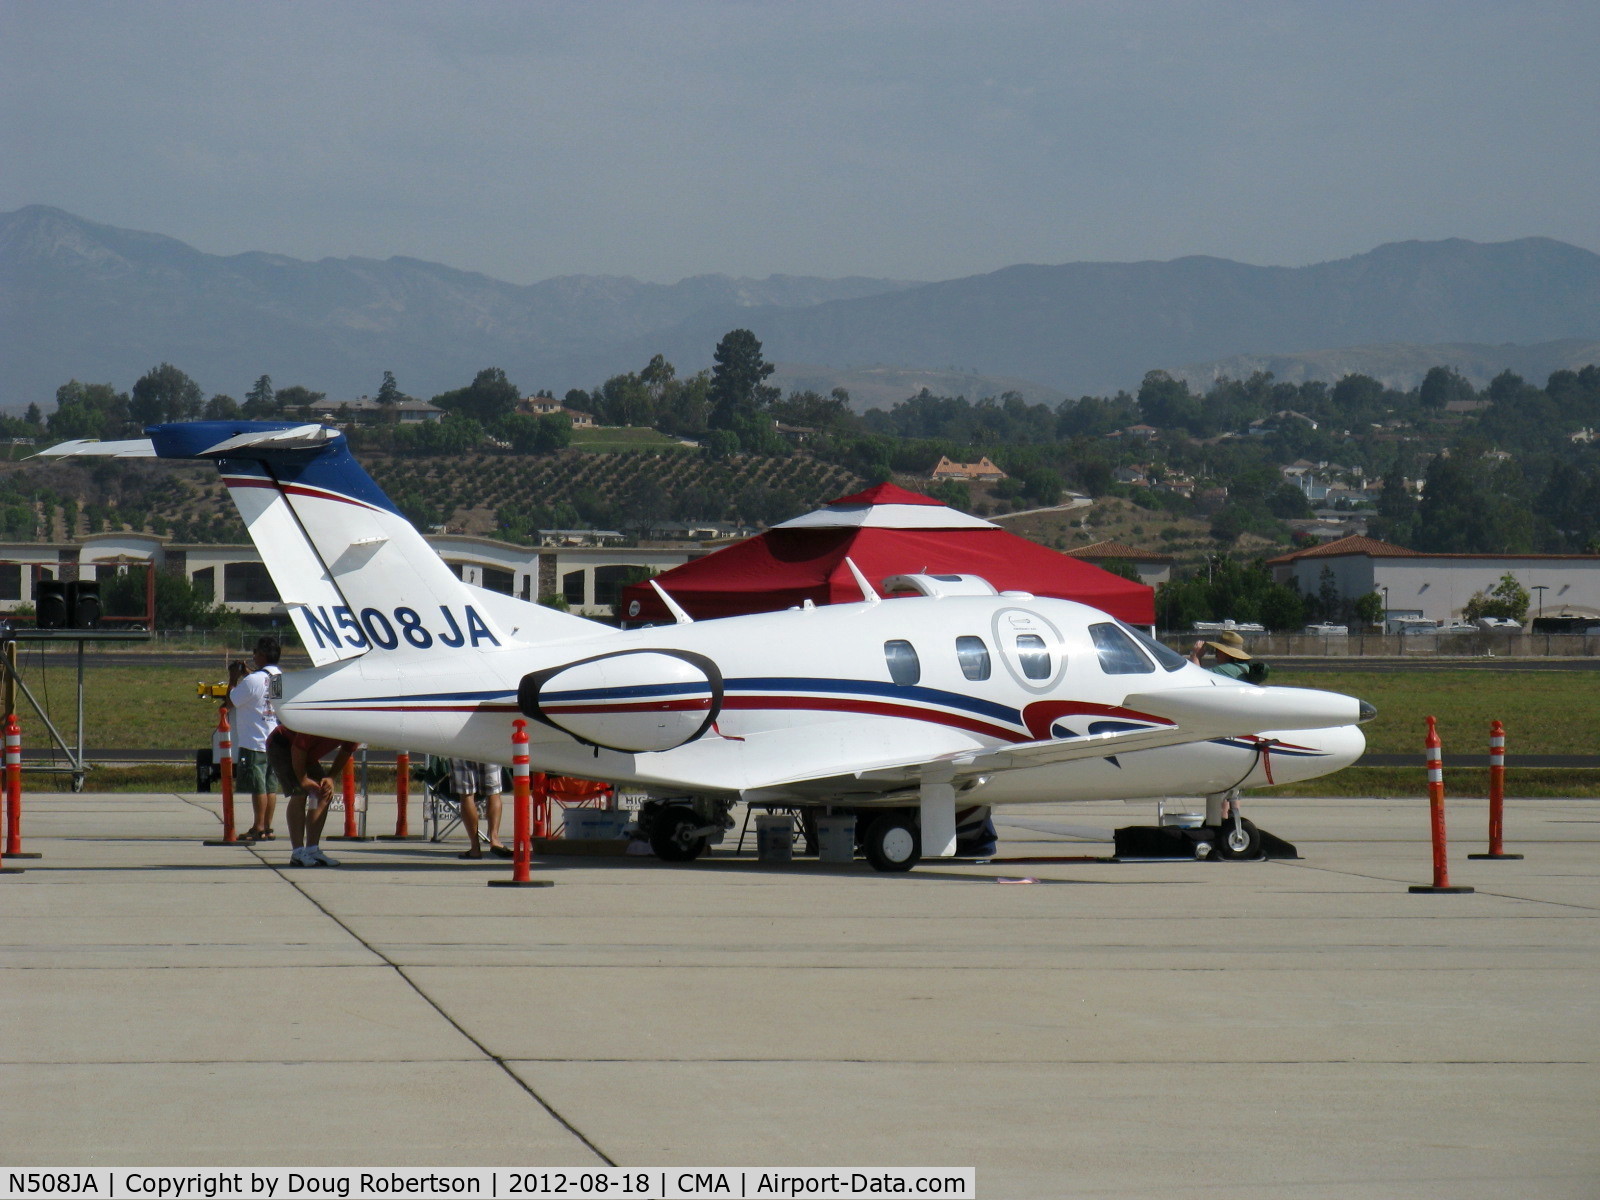 N508JA, 2006 Eclipse Aviation Corp EA500 C/N 000001, 2006 Eclipse EA500 VLJ, two P&W(C)PW610F-A Turbofans 900 lb st each, with FADEC, 1st production EA500